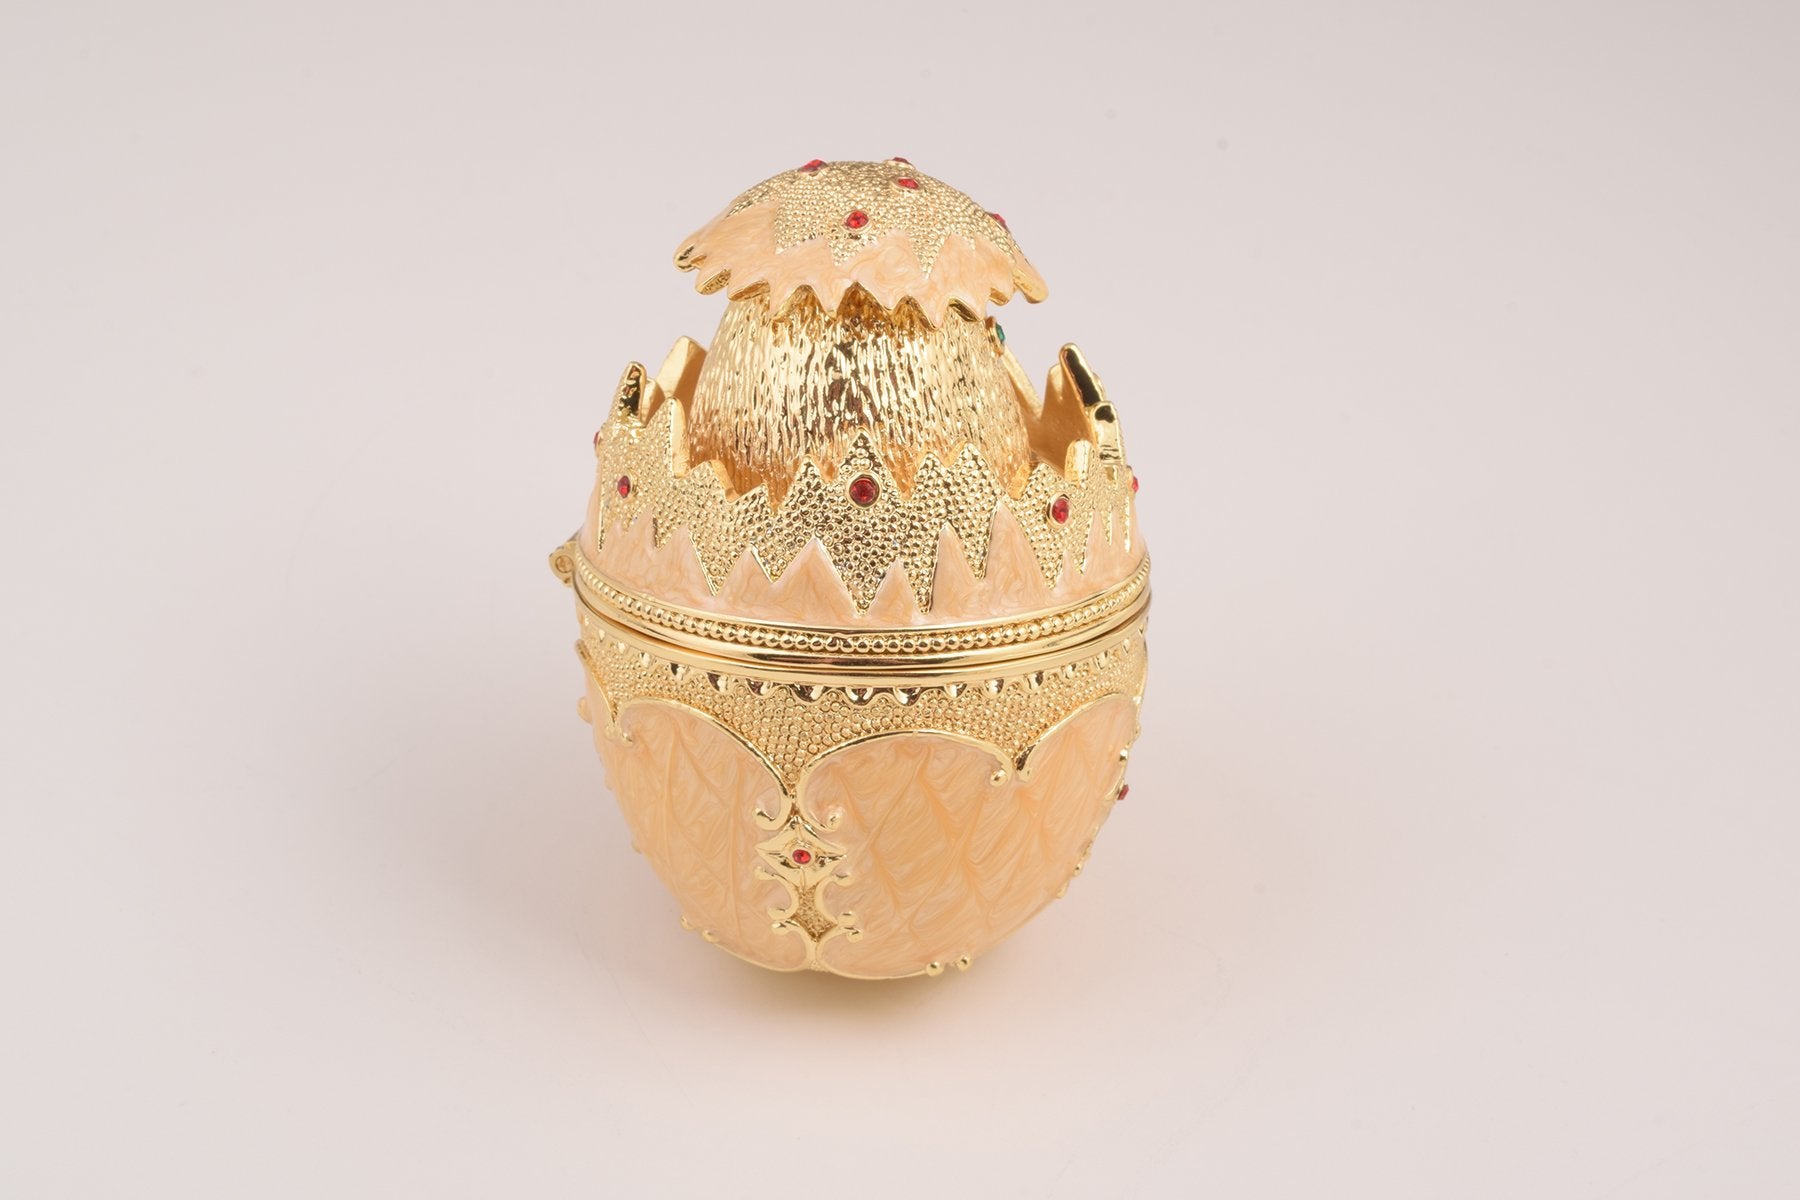 Keren Kopal Pink Chicken in Egg Faberge Egg  89.00